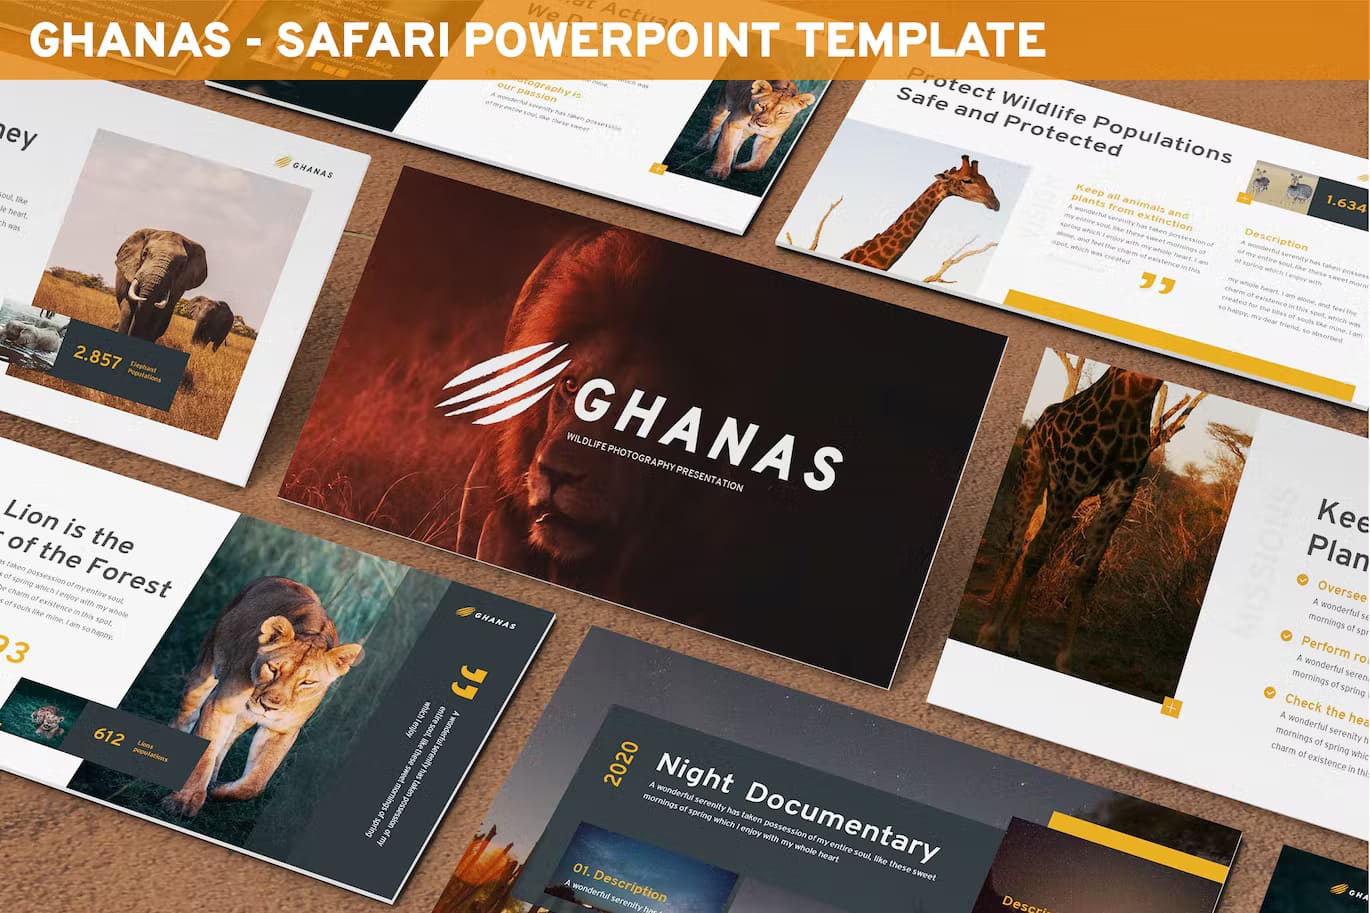 Ghanas - Safari Powerpoint Template.